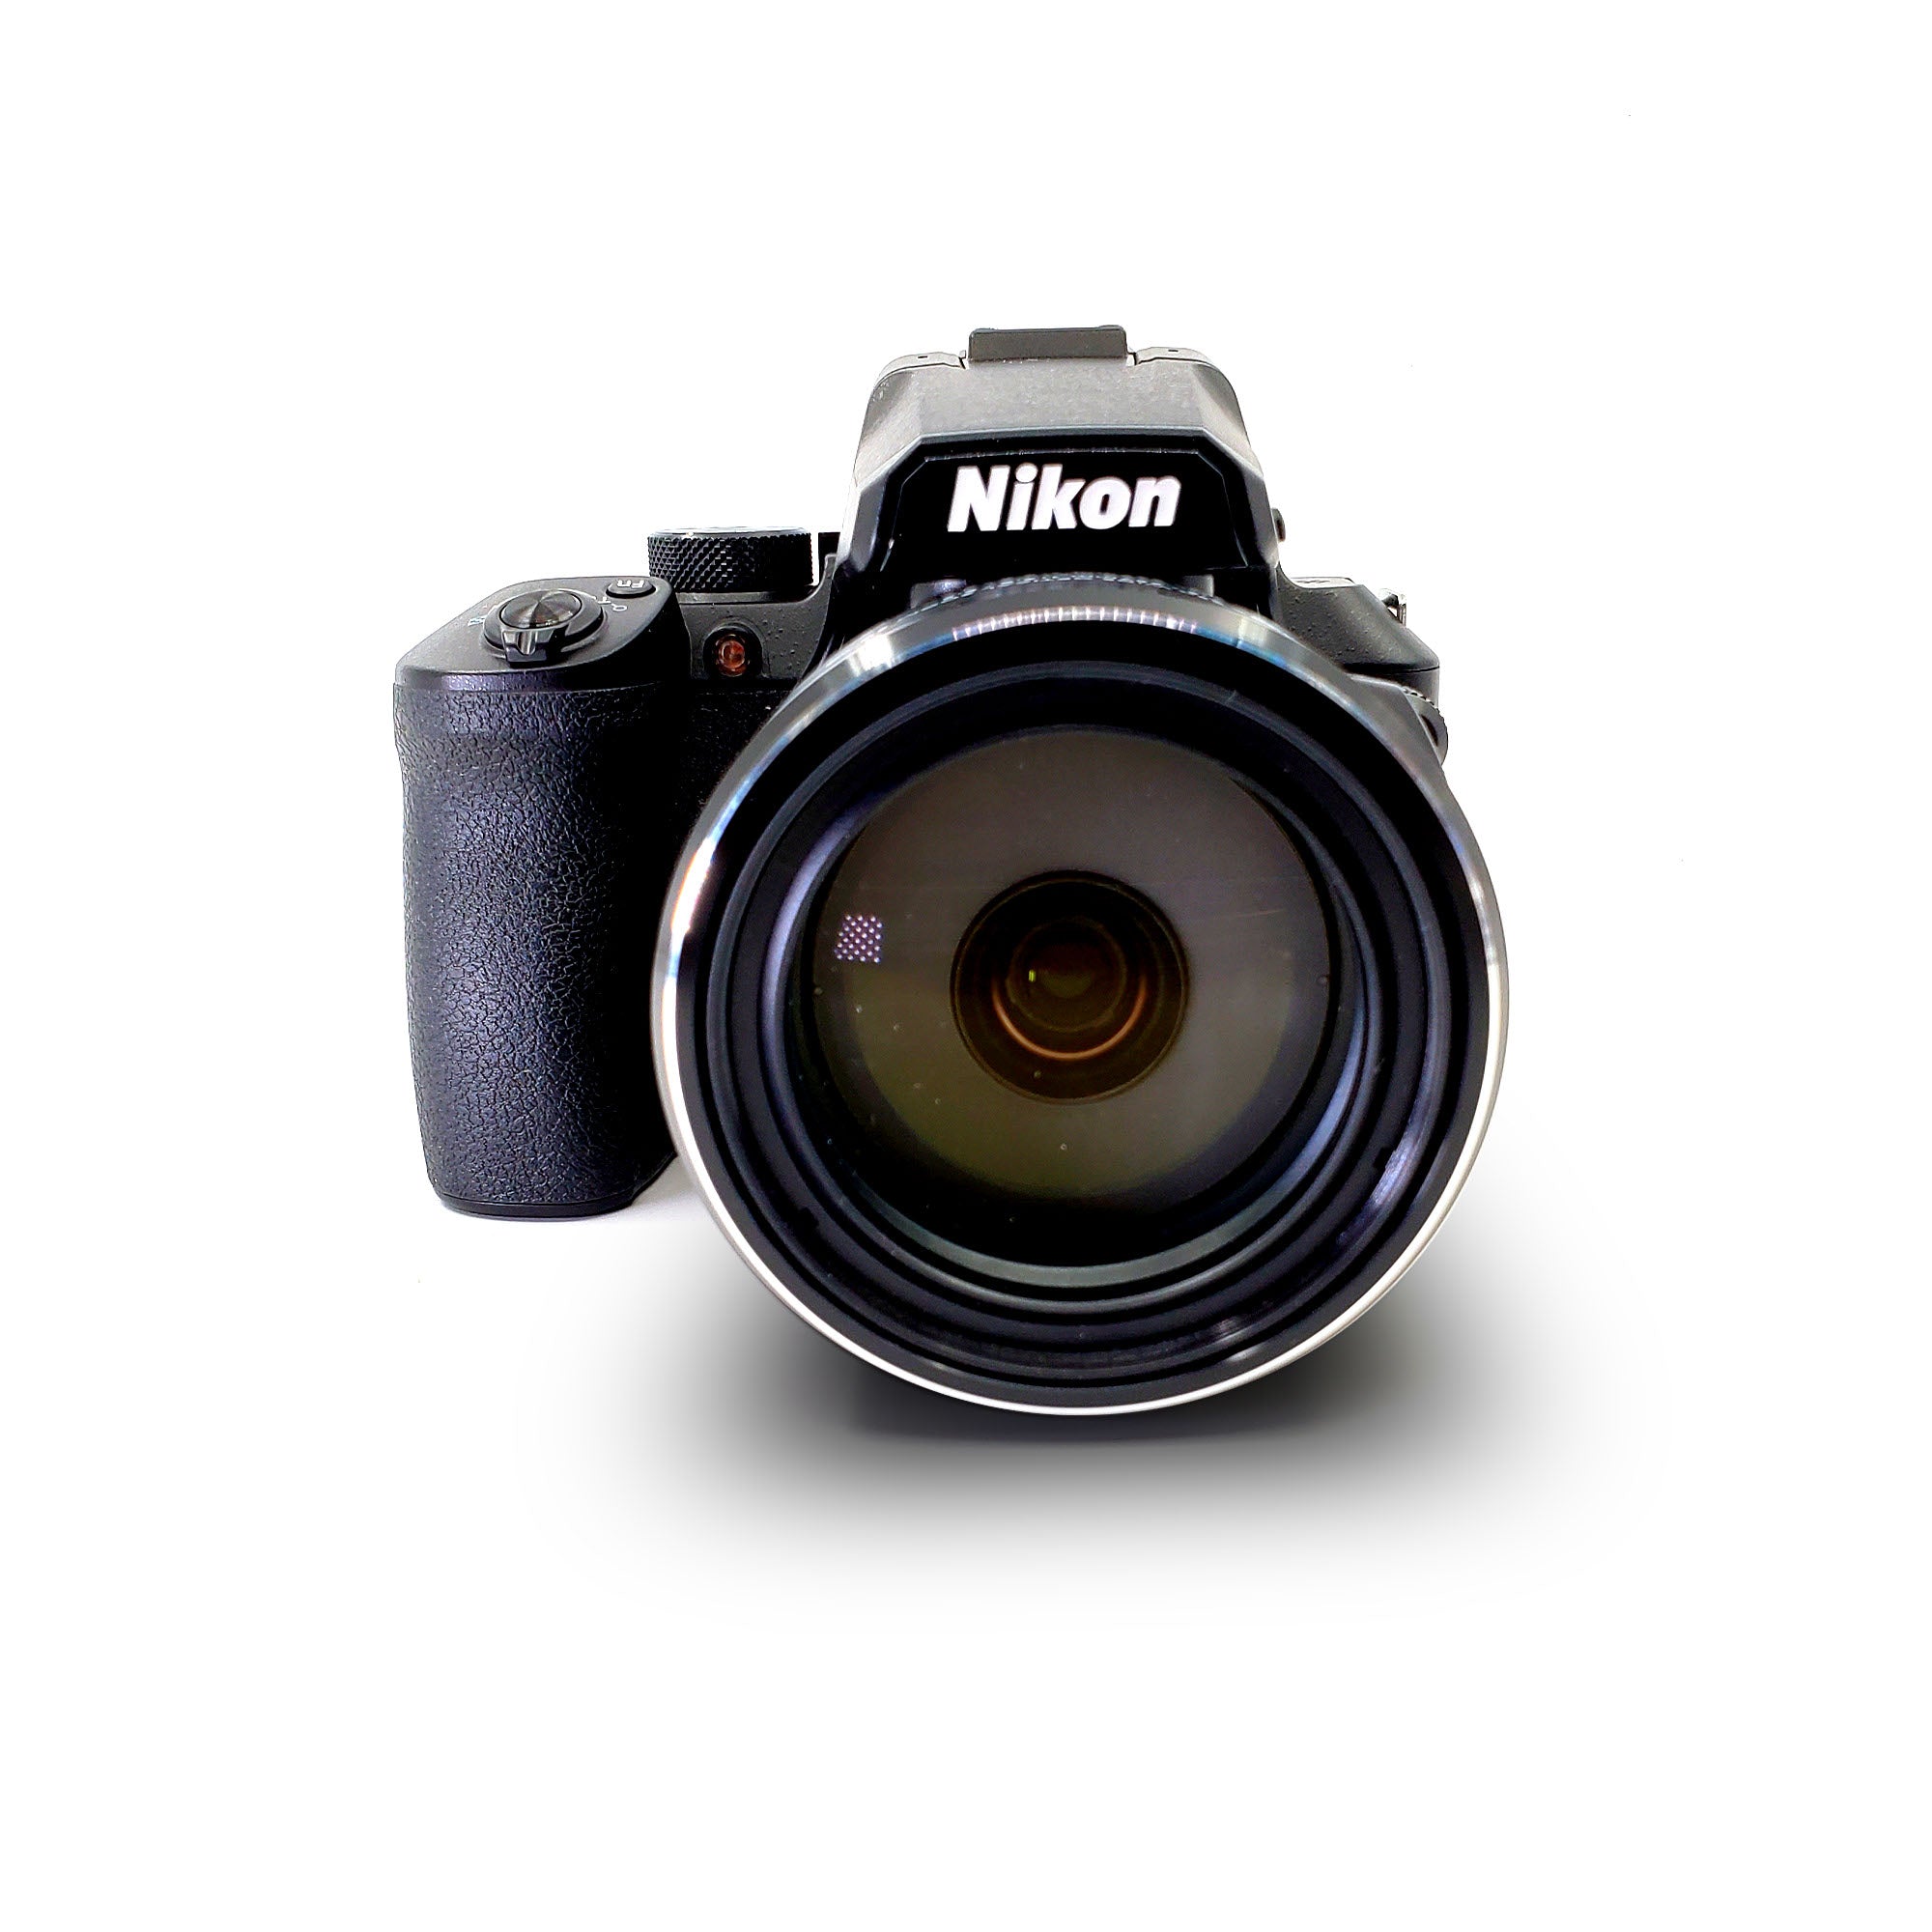 Nikon COOLPIX P950